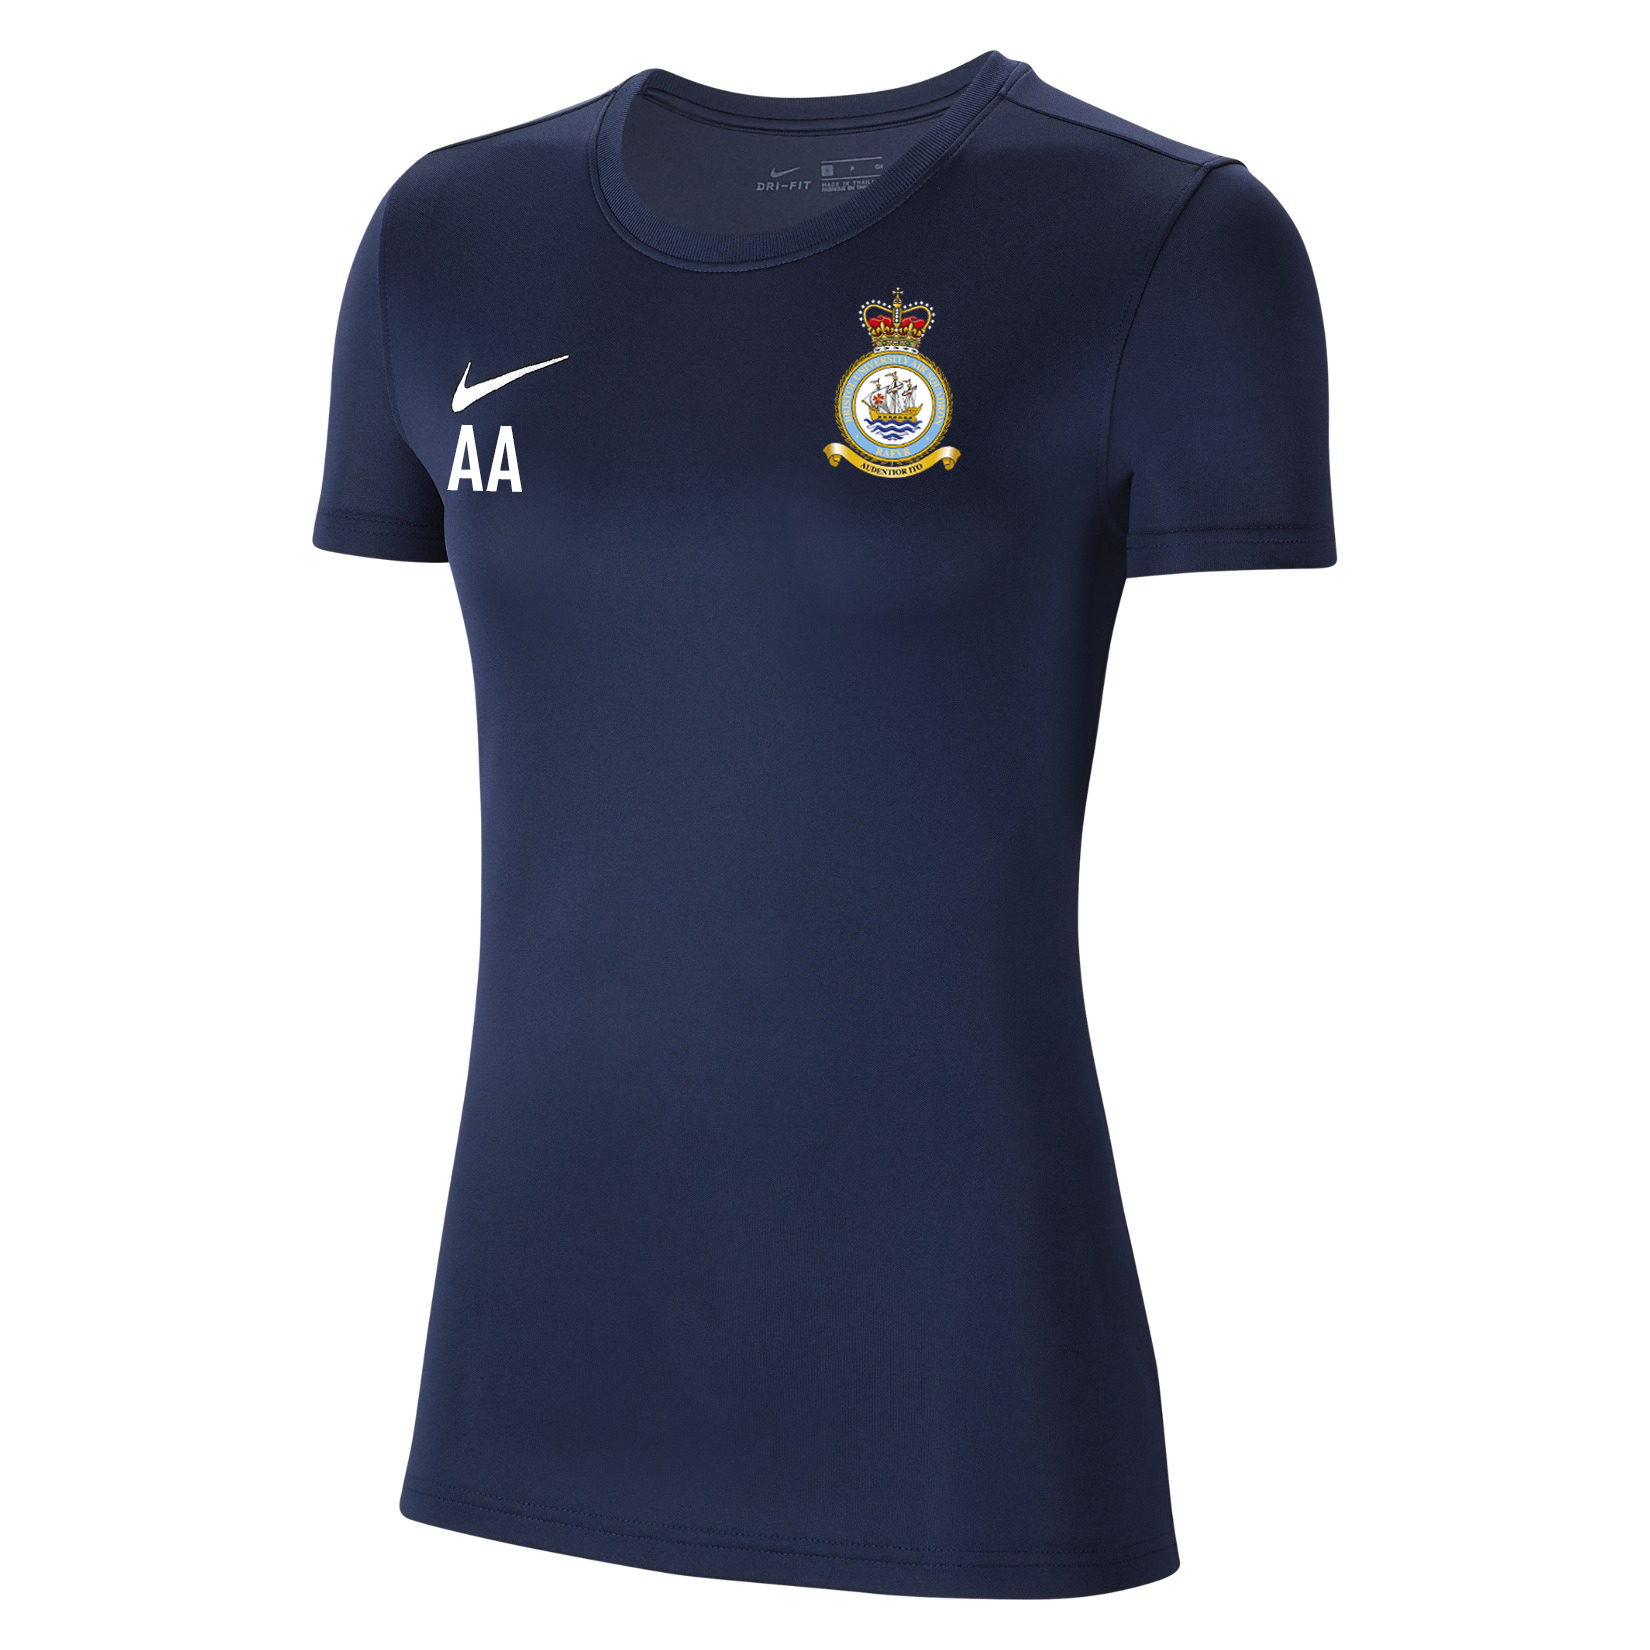 Nike Womens Park VII Dri-FIT Short Sleeve Shirt (W) Midnight Navy-White